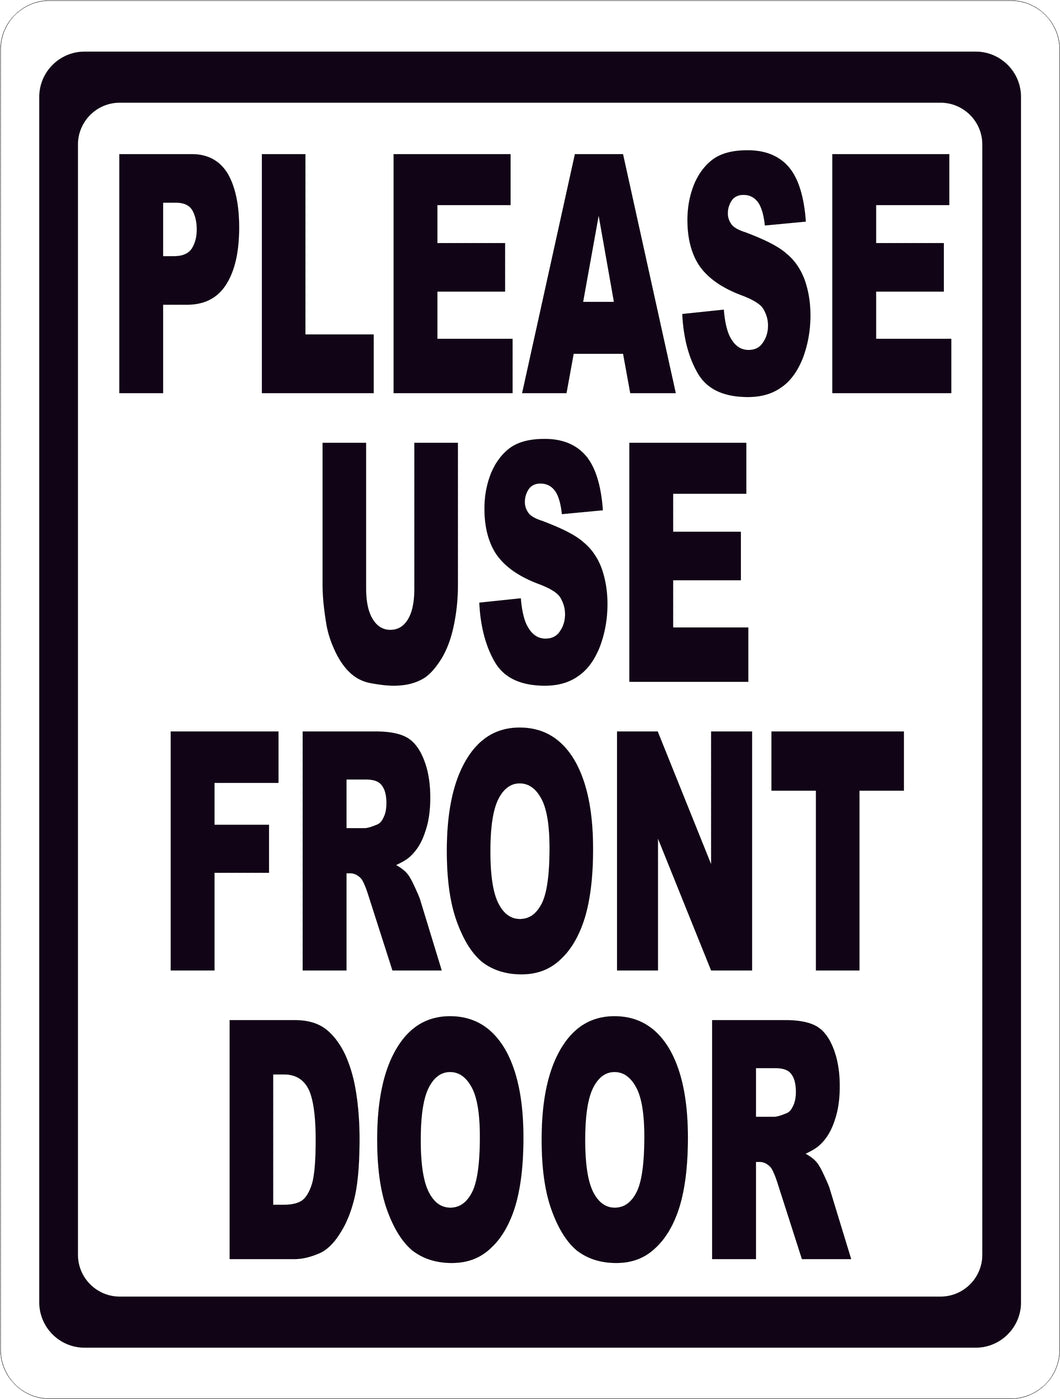 Please Use Frint Door Sign